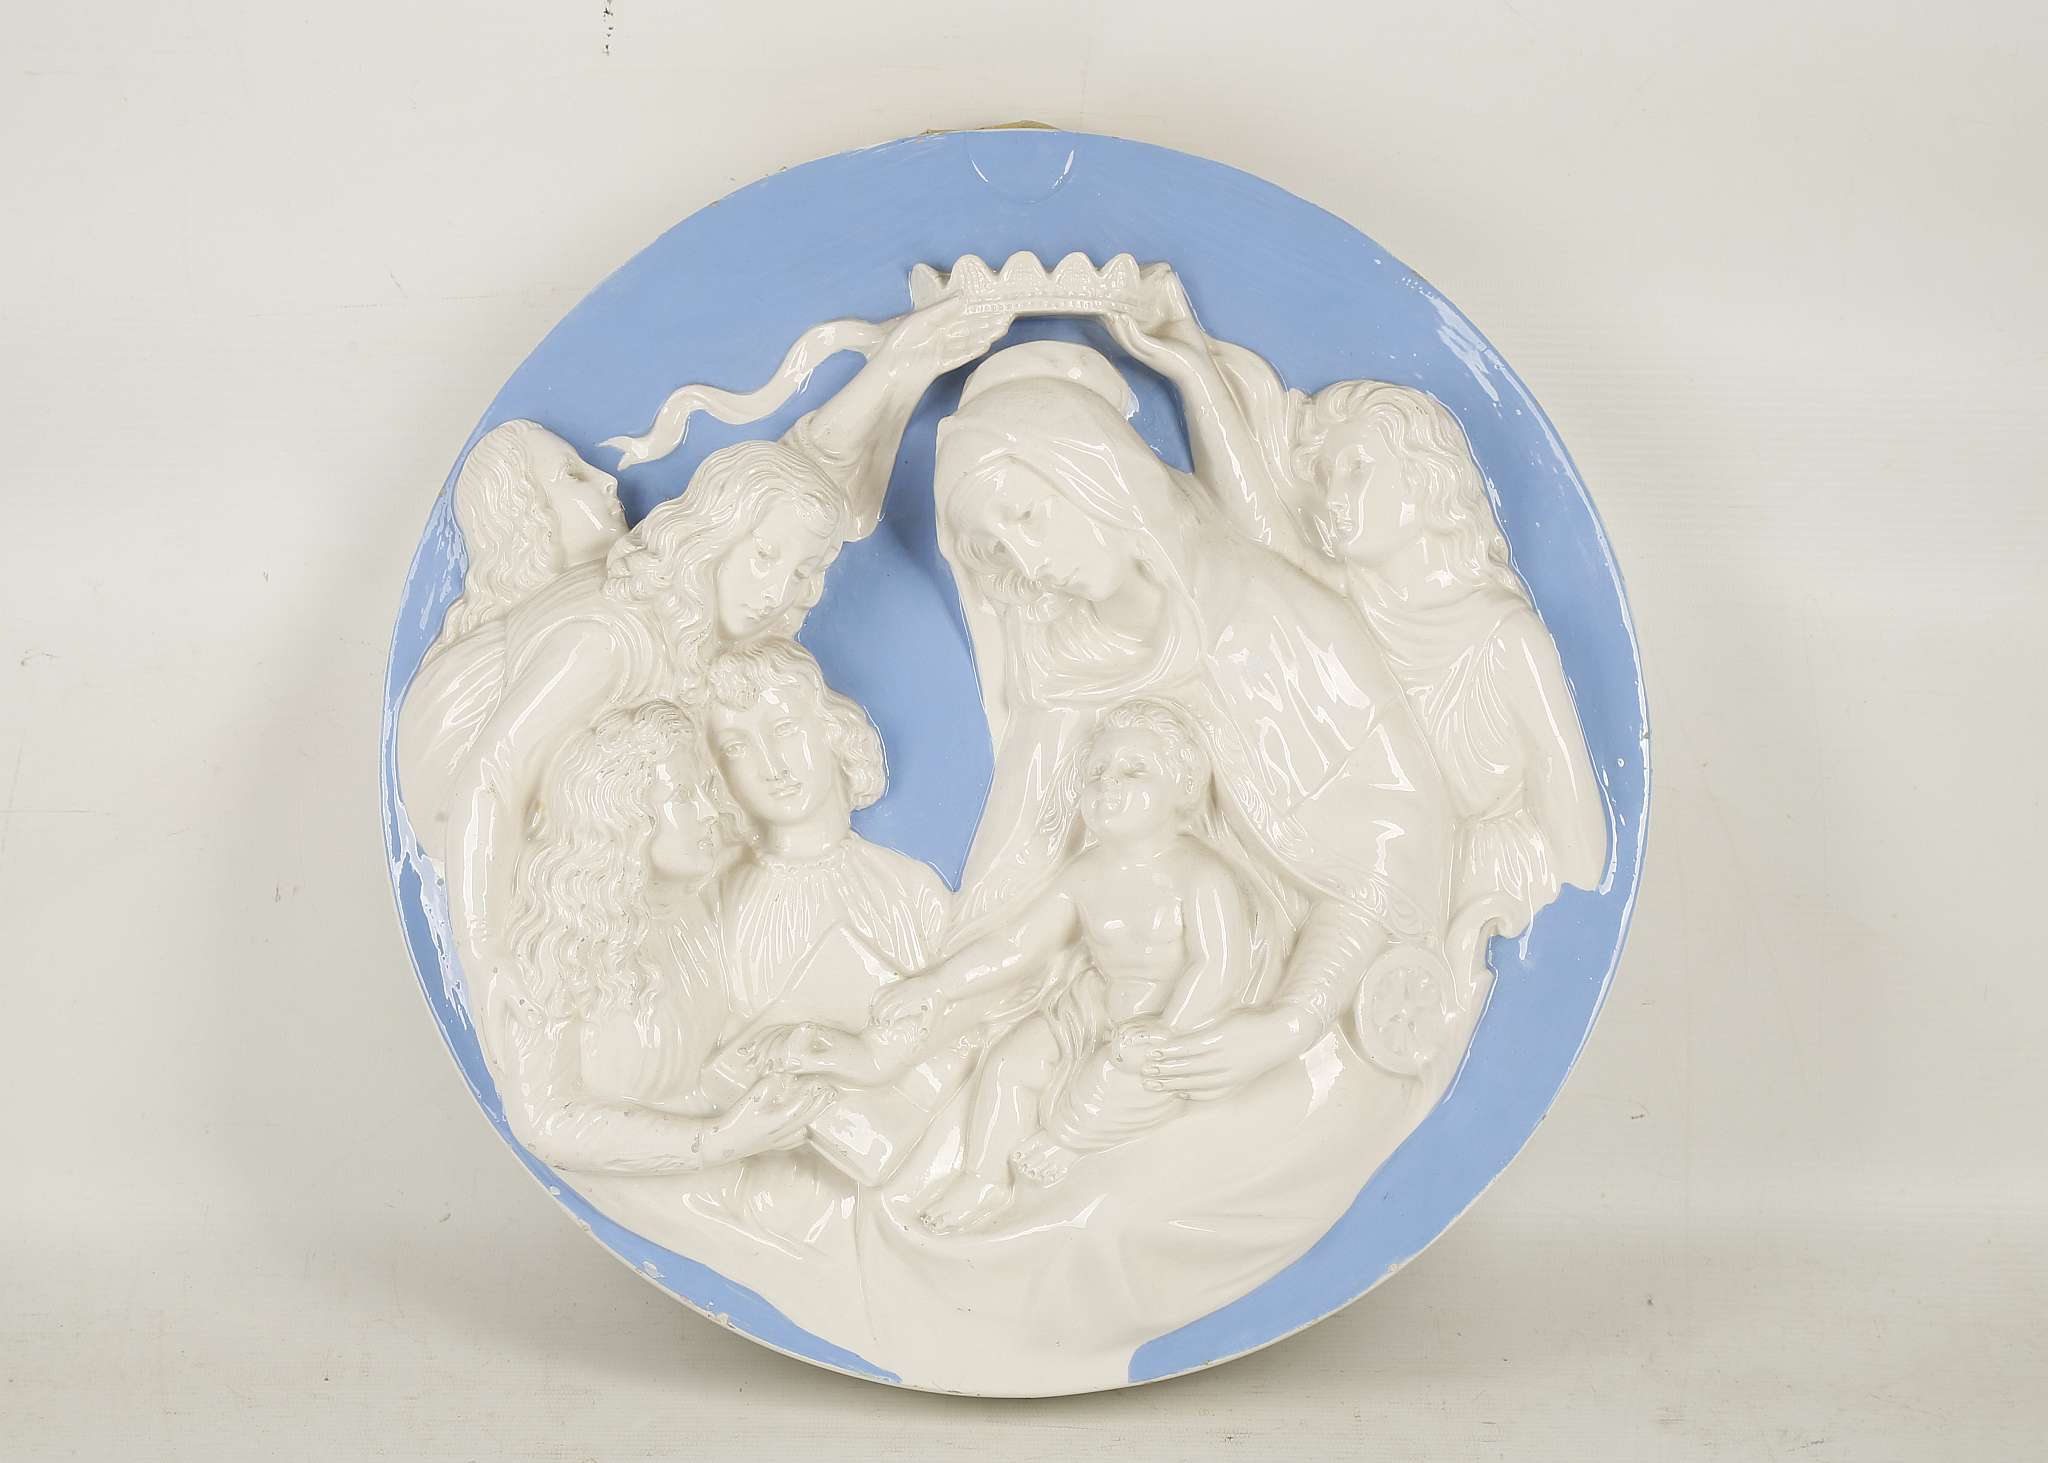 An Italian Della Robbia style earthenware - Maiolica circular wall plaque, polychrome enamel